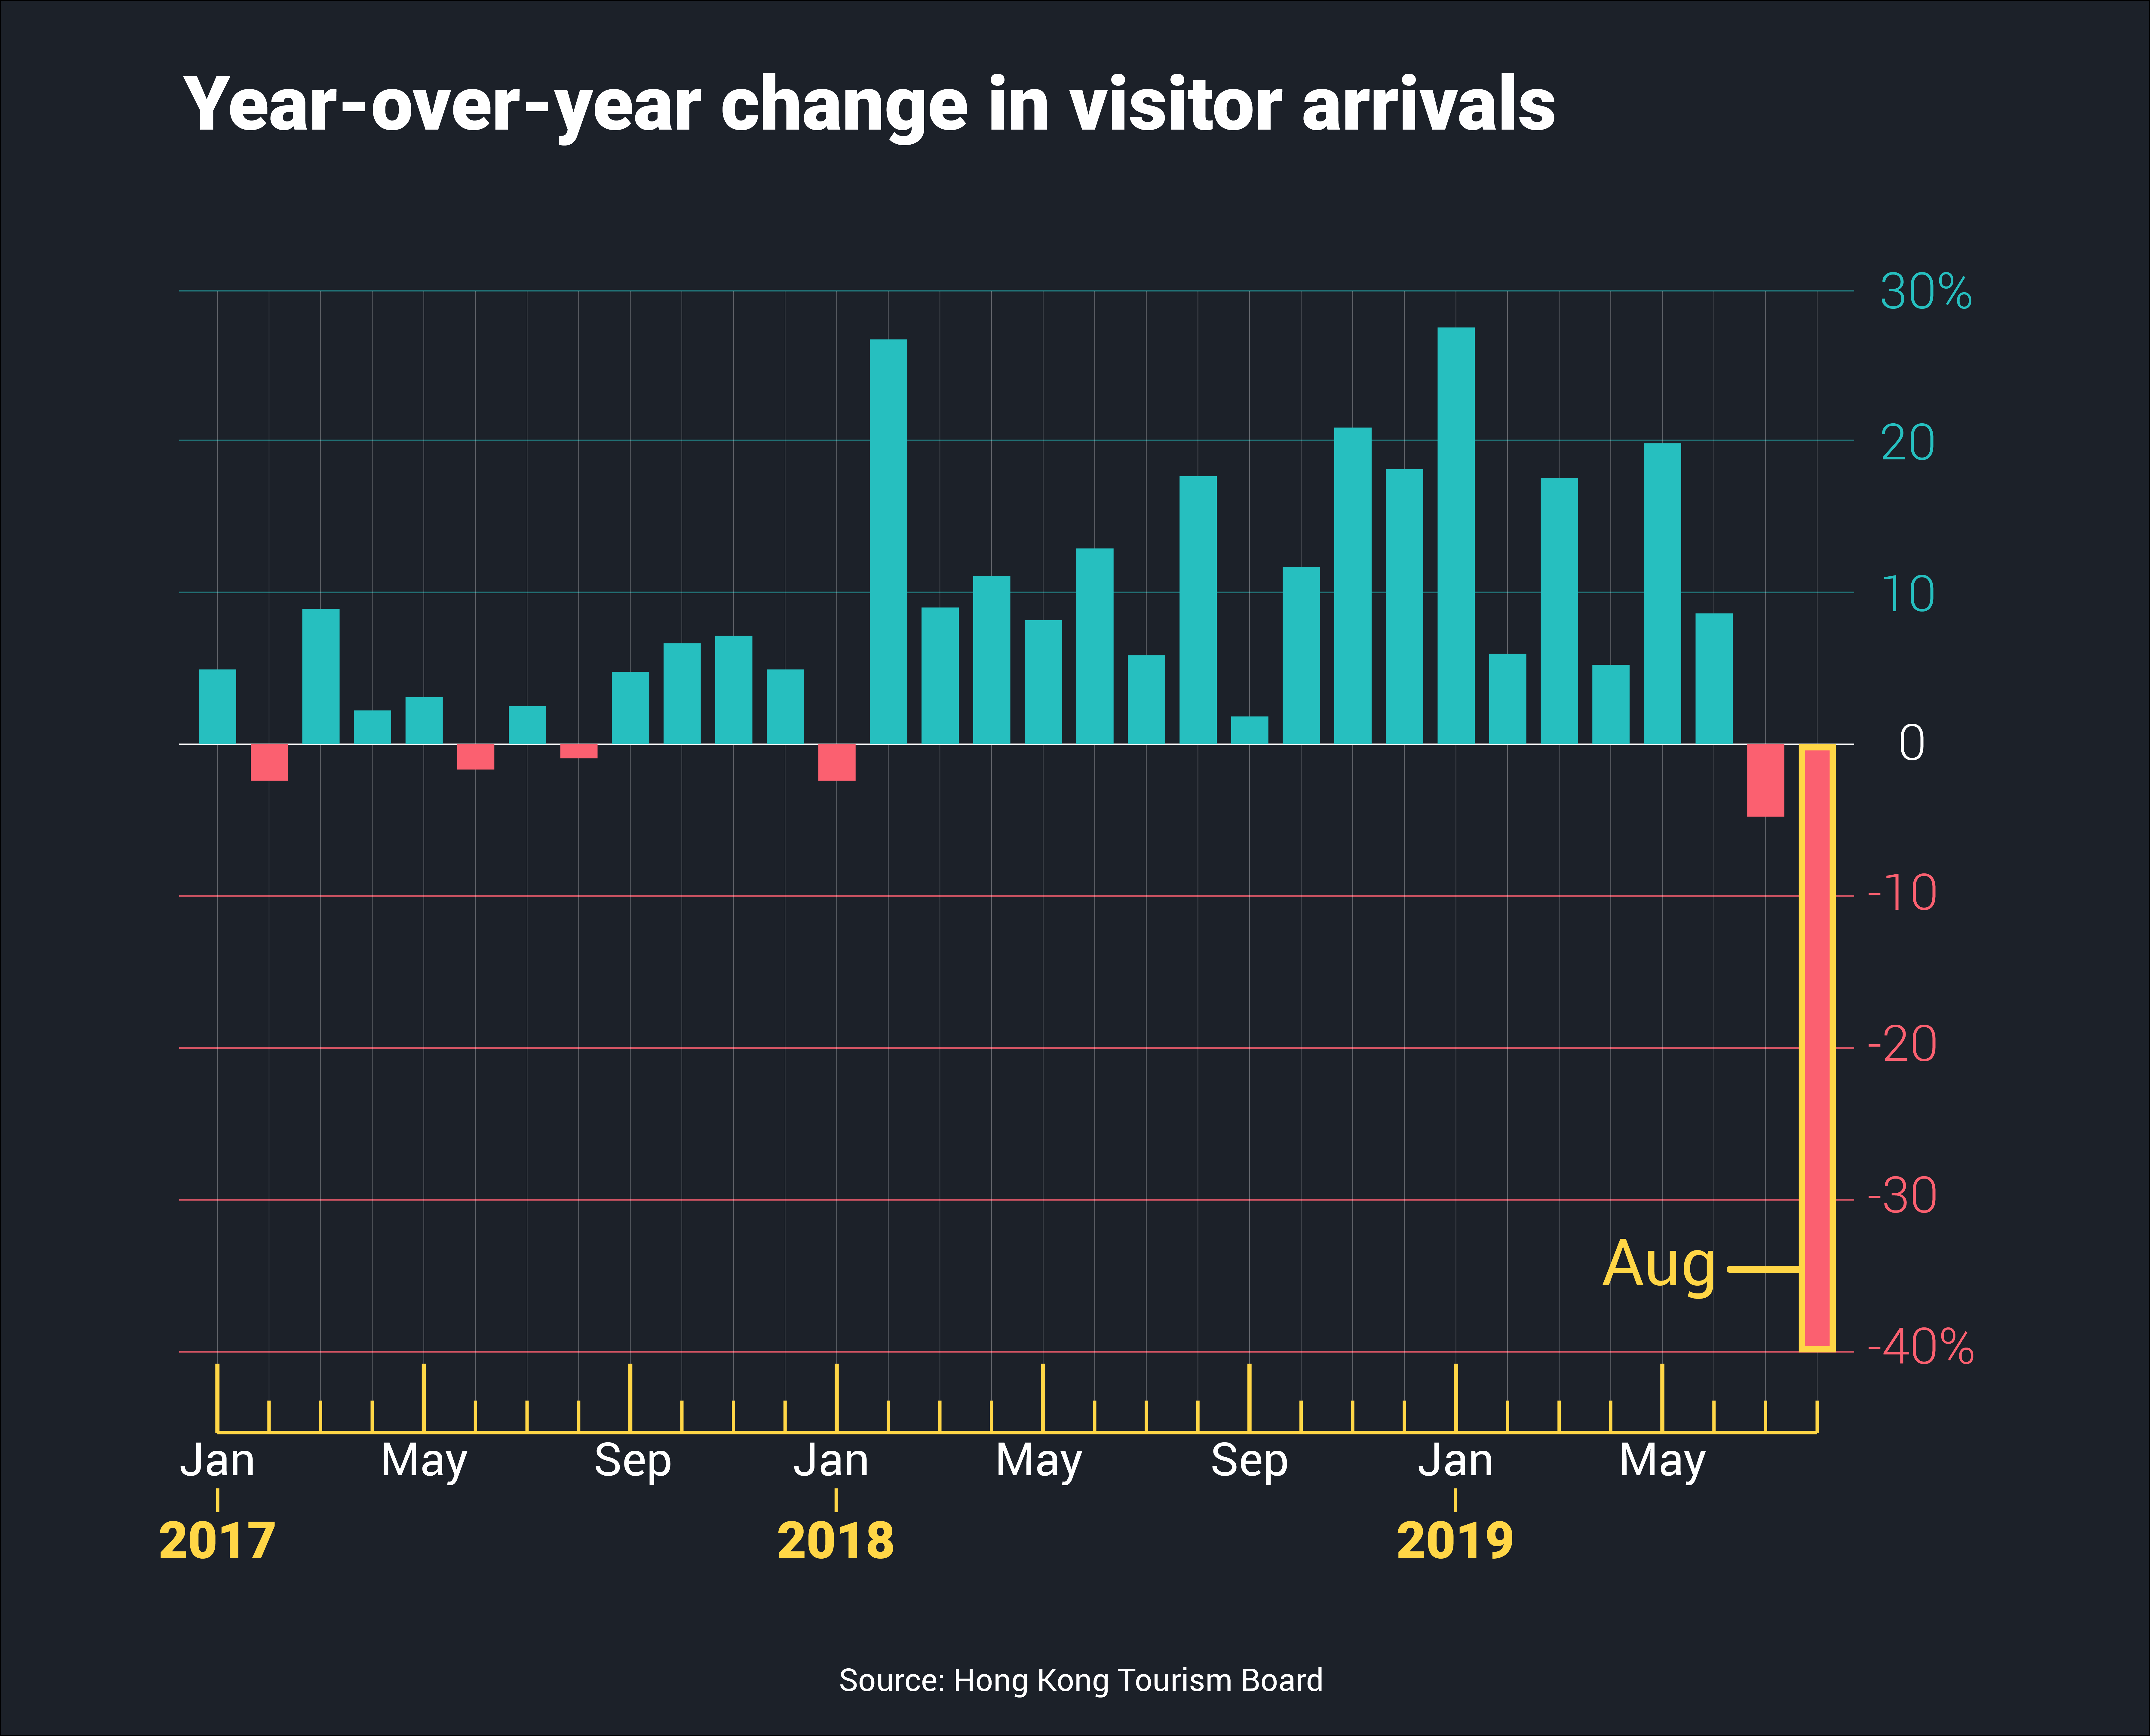 Disneyland Attendance Chart By Month